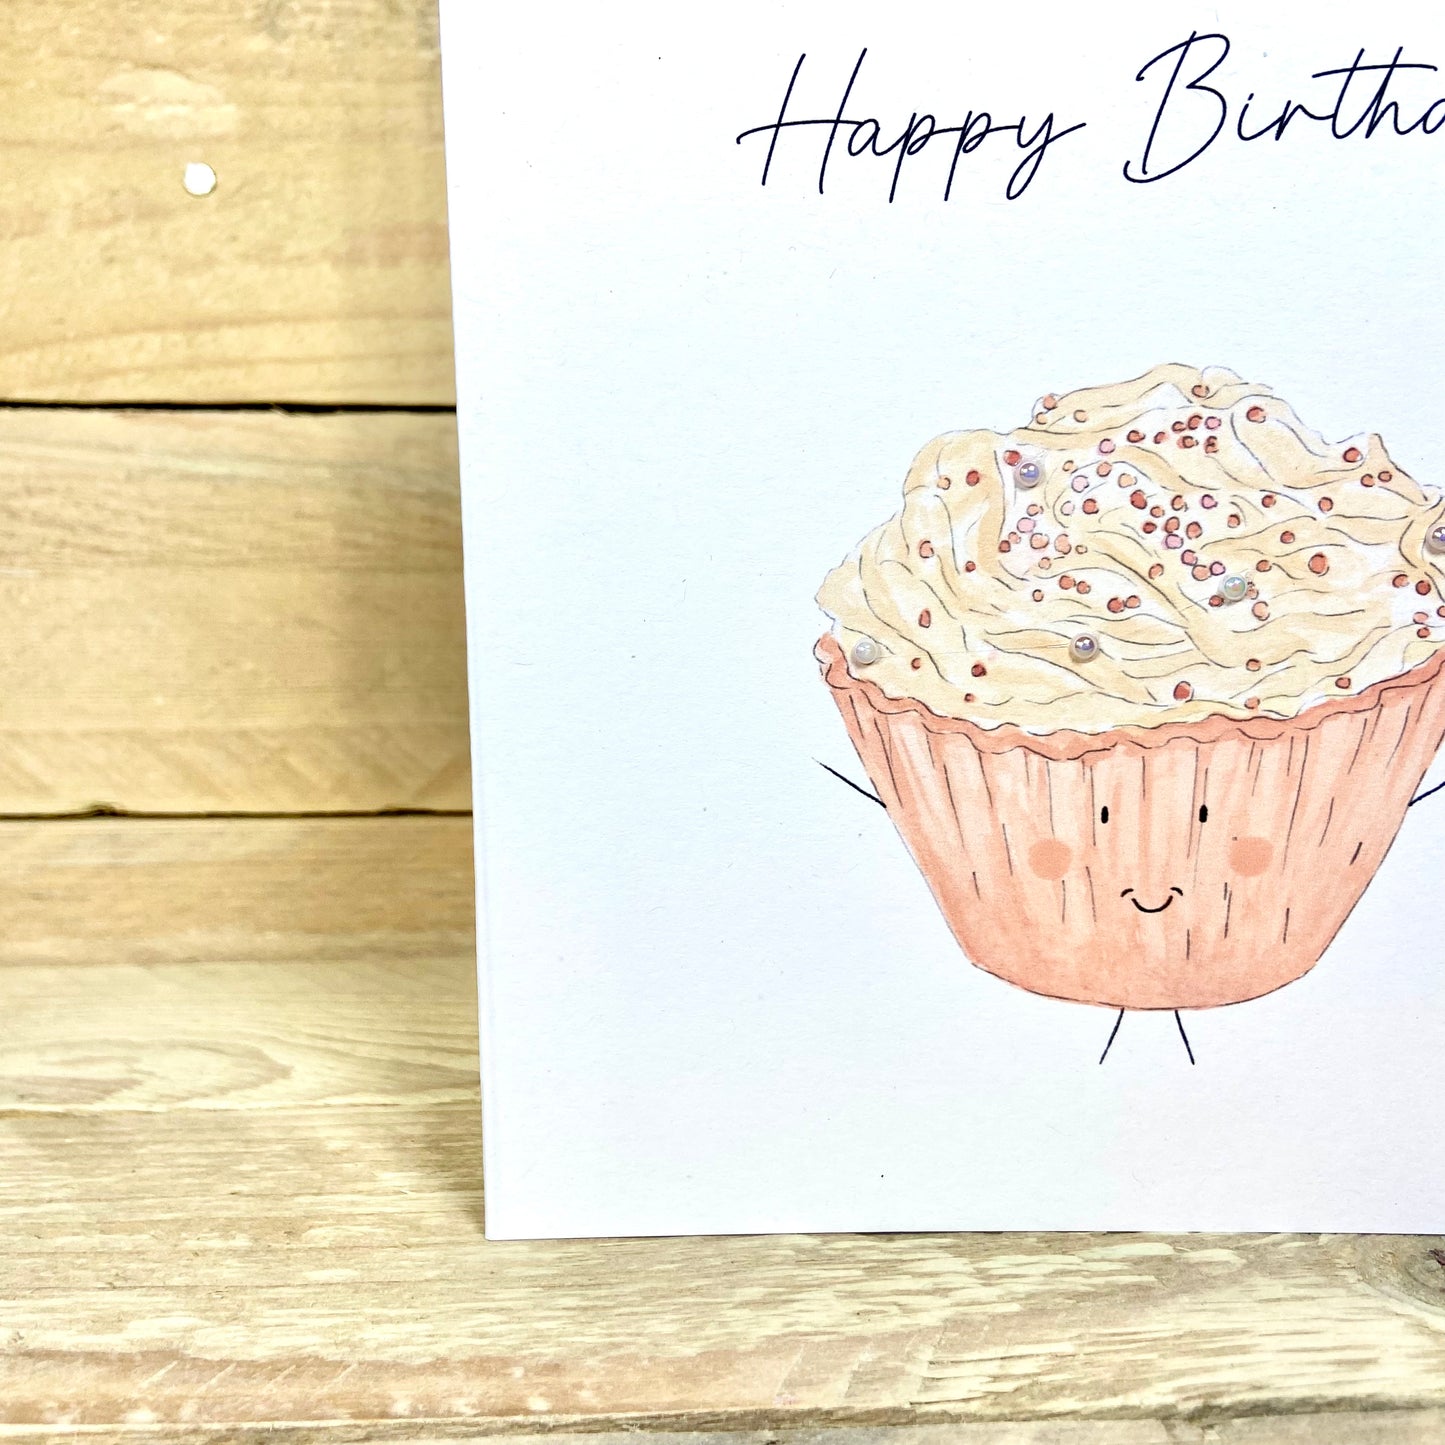 Beatrice the Blushing Cupcake Birthday Card